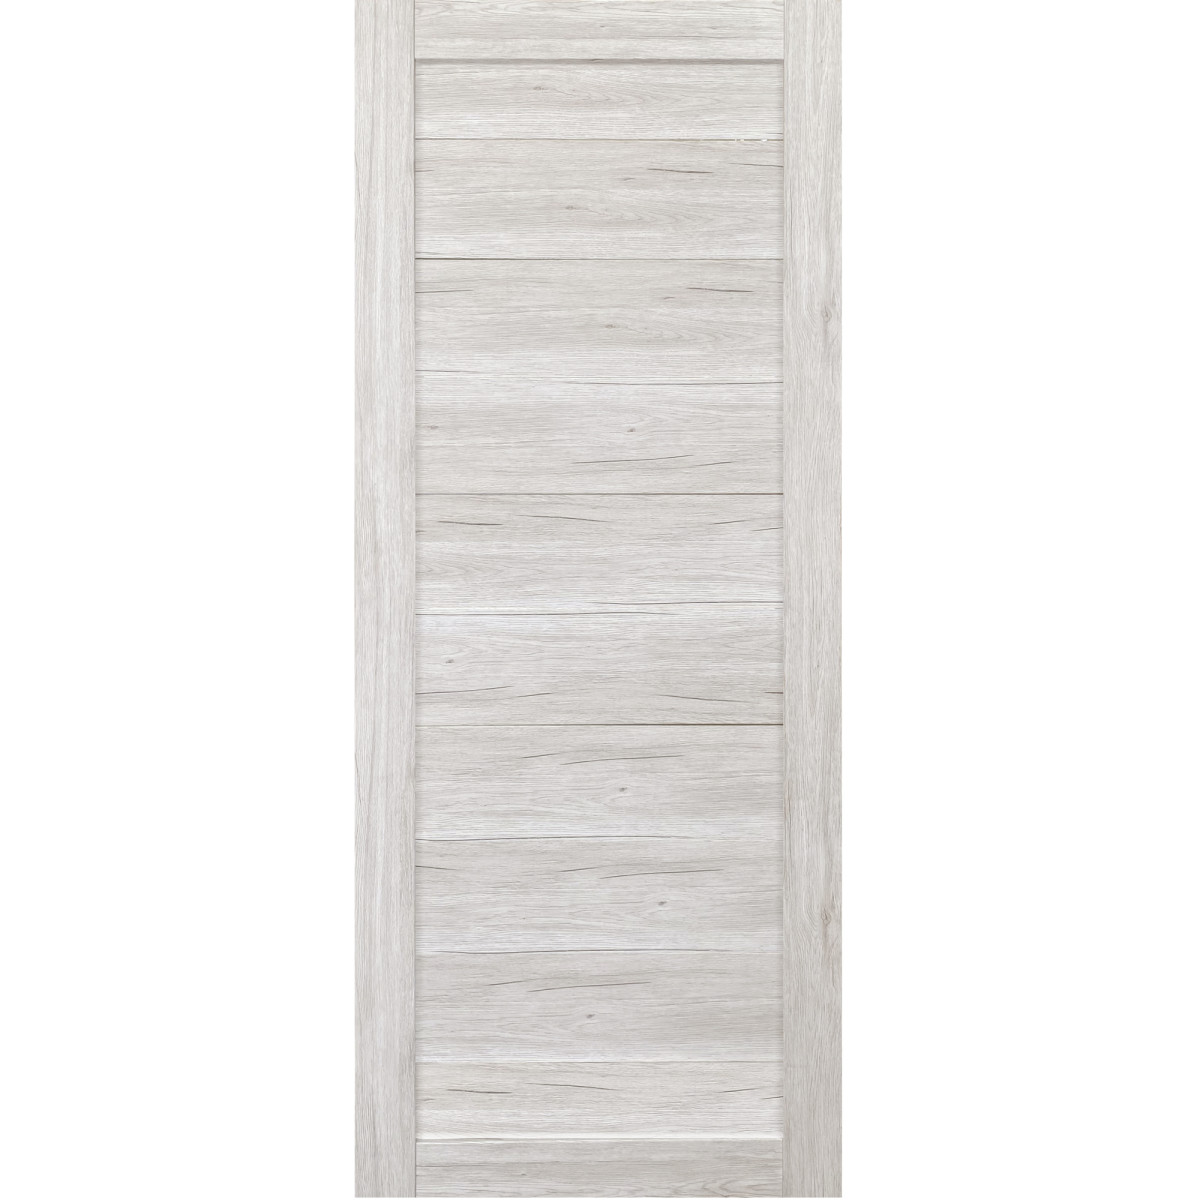 Дверь межкомнатная Тиволи 80х200 см с фурнитурой, ПВХ, цвет рустик серый